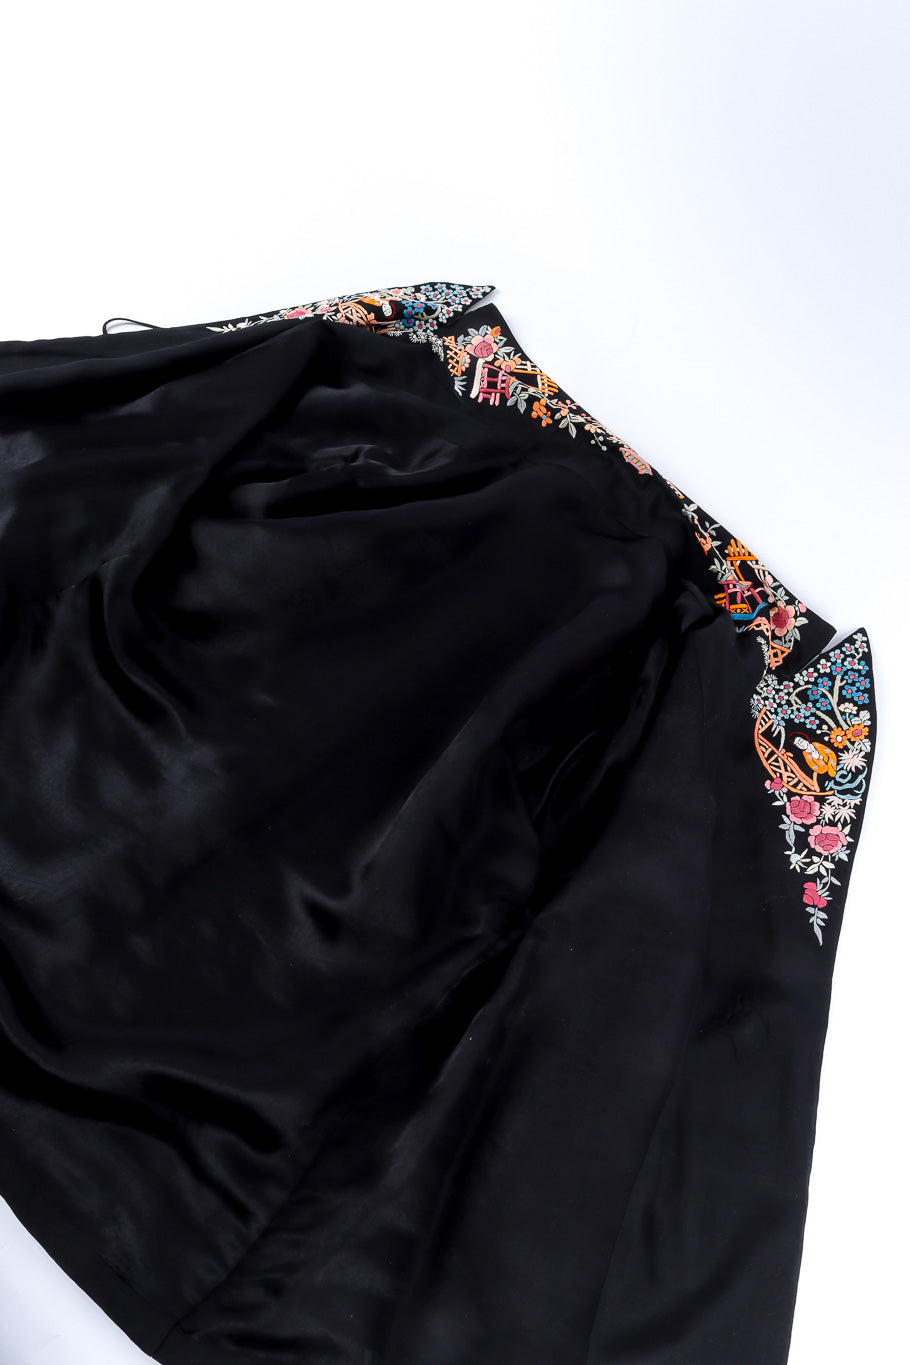 Embroidered silk multi-color jacket lining detail @recessla